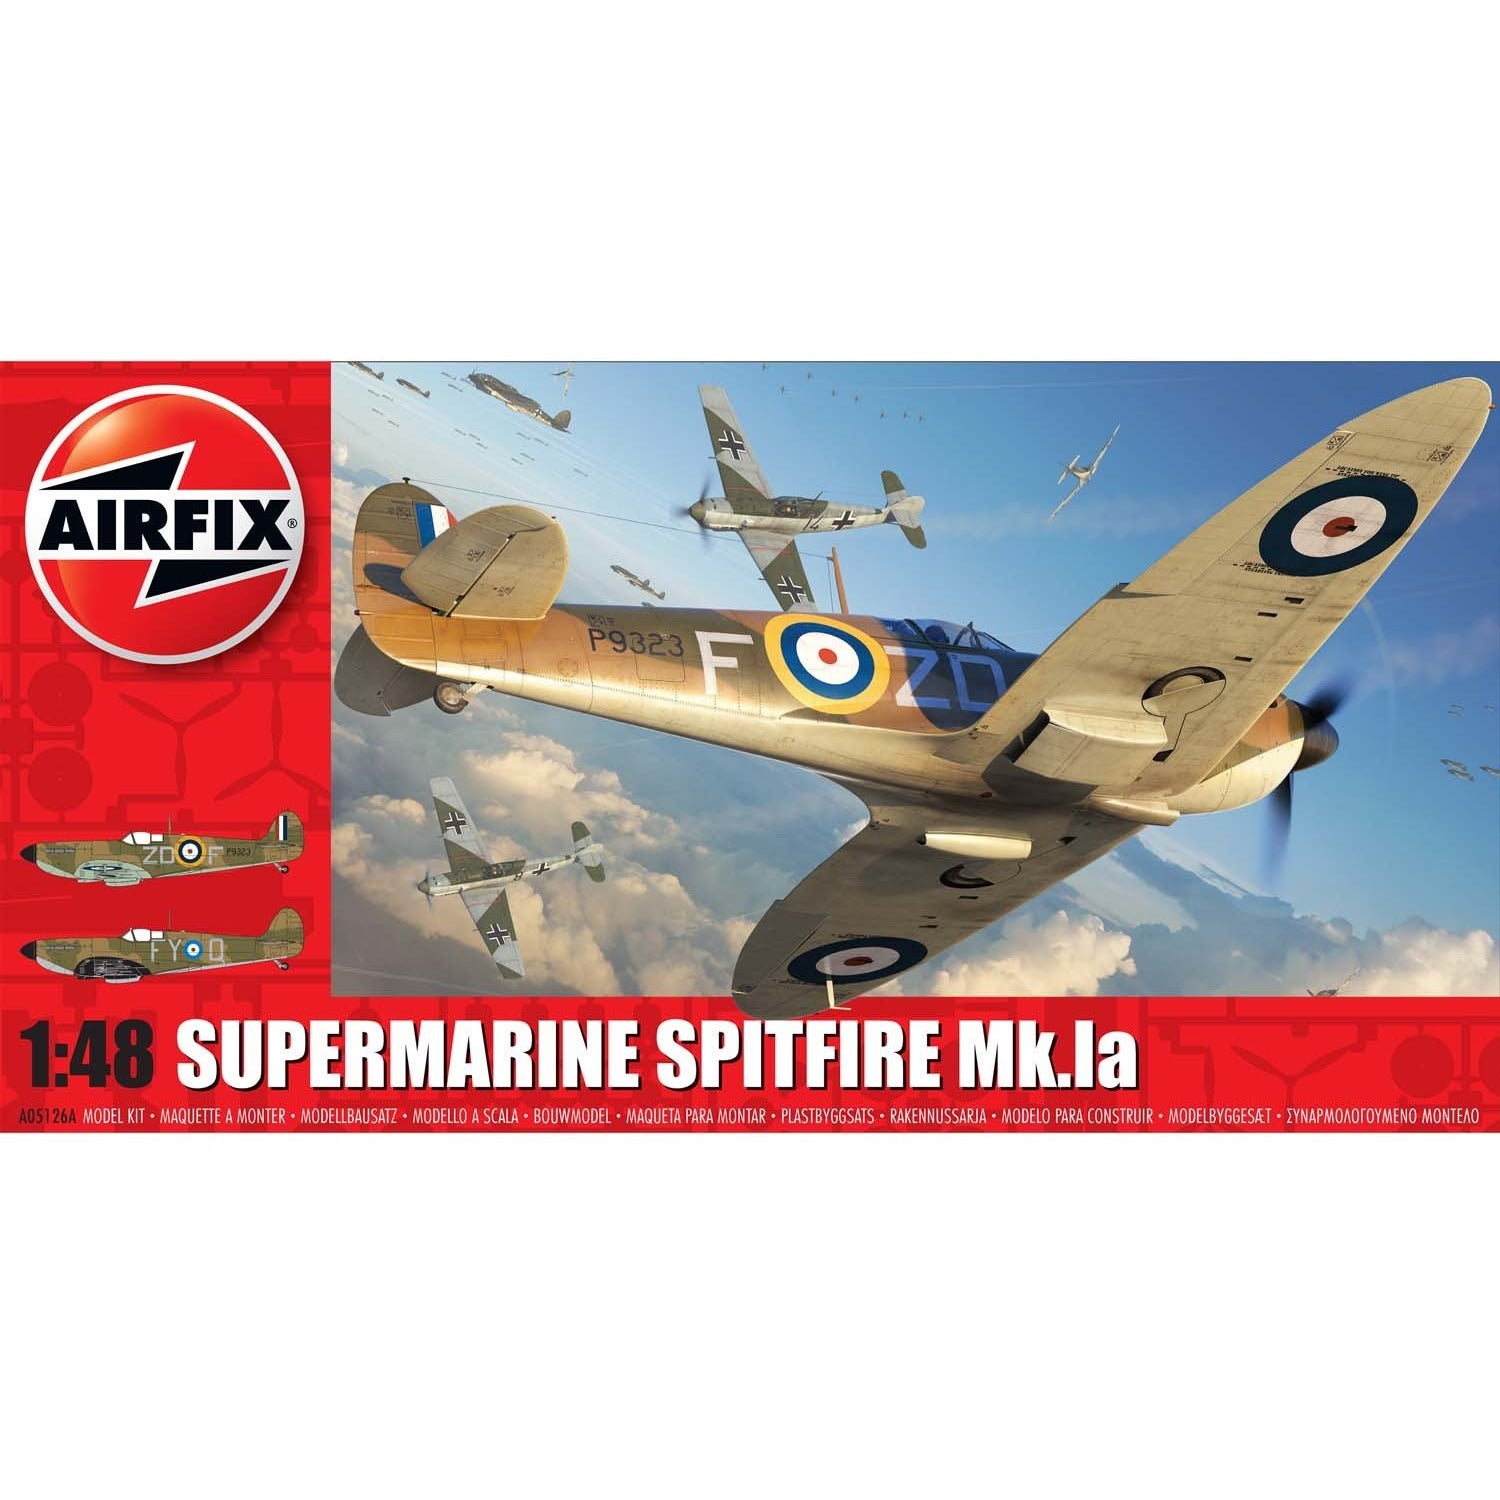 Supermarine Spitfire Mk.Ia 1/48 by Airfix